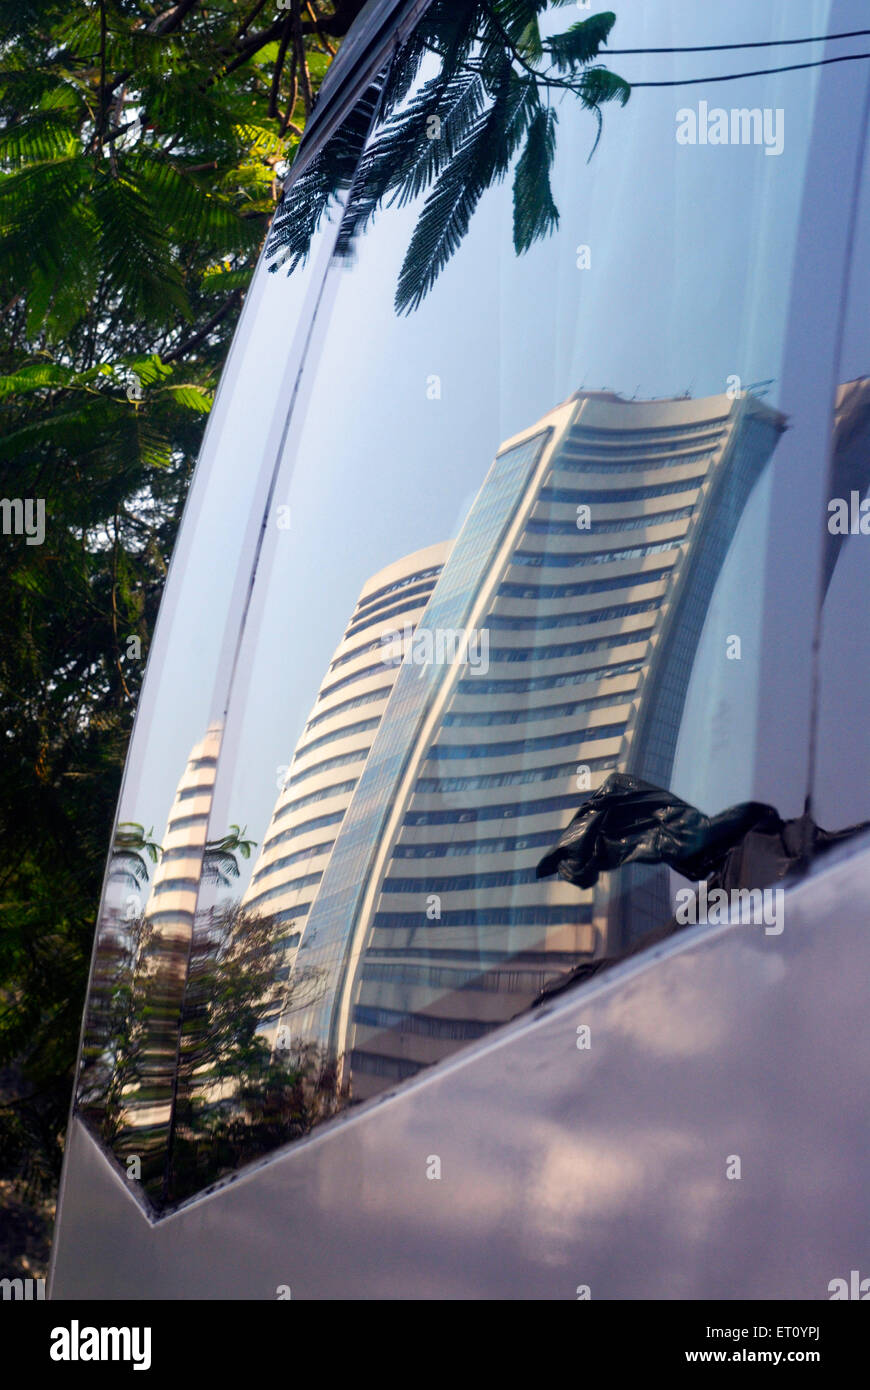 BSE, Bombay Stock Exchange building reflection, Kala Ghoda, Bombay, Mumbai, Maharashtra, India Stock Photo